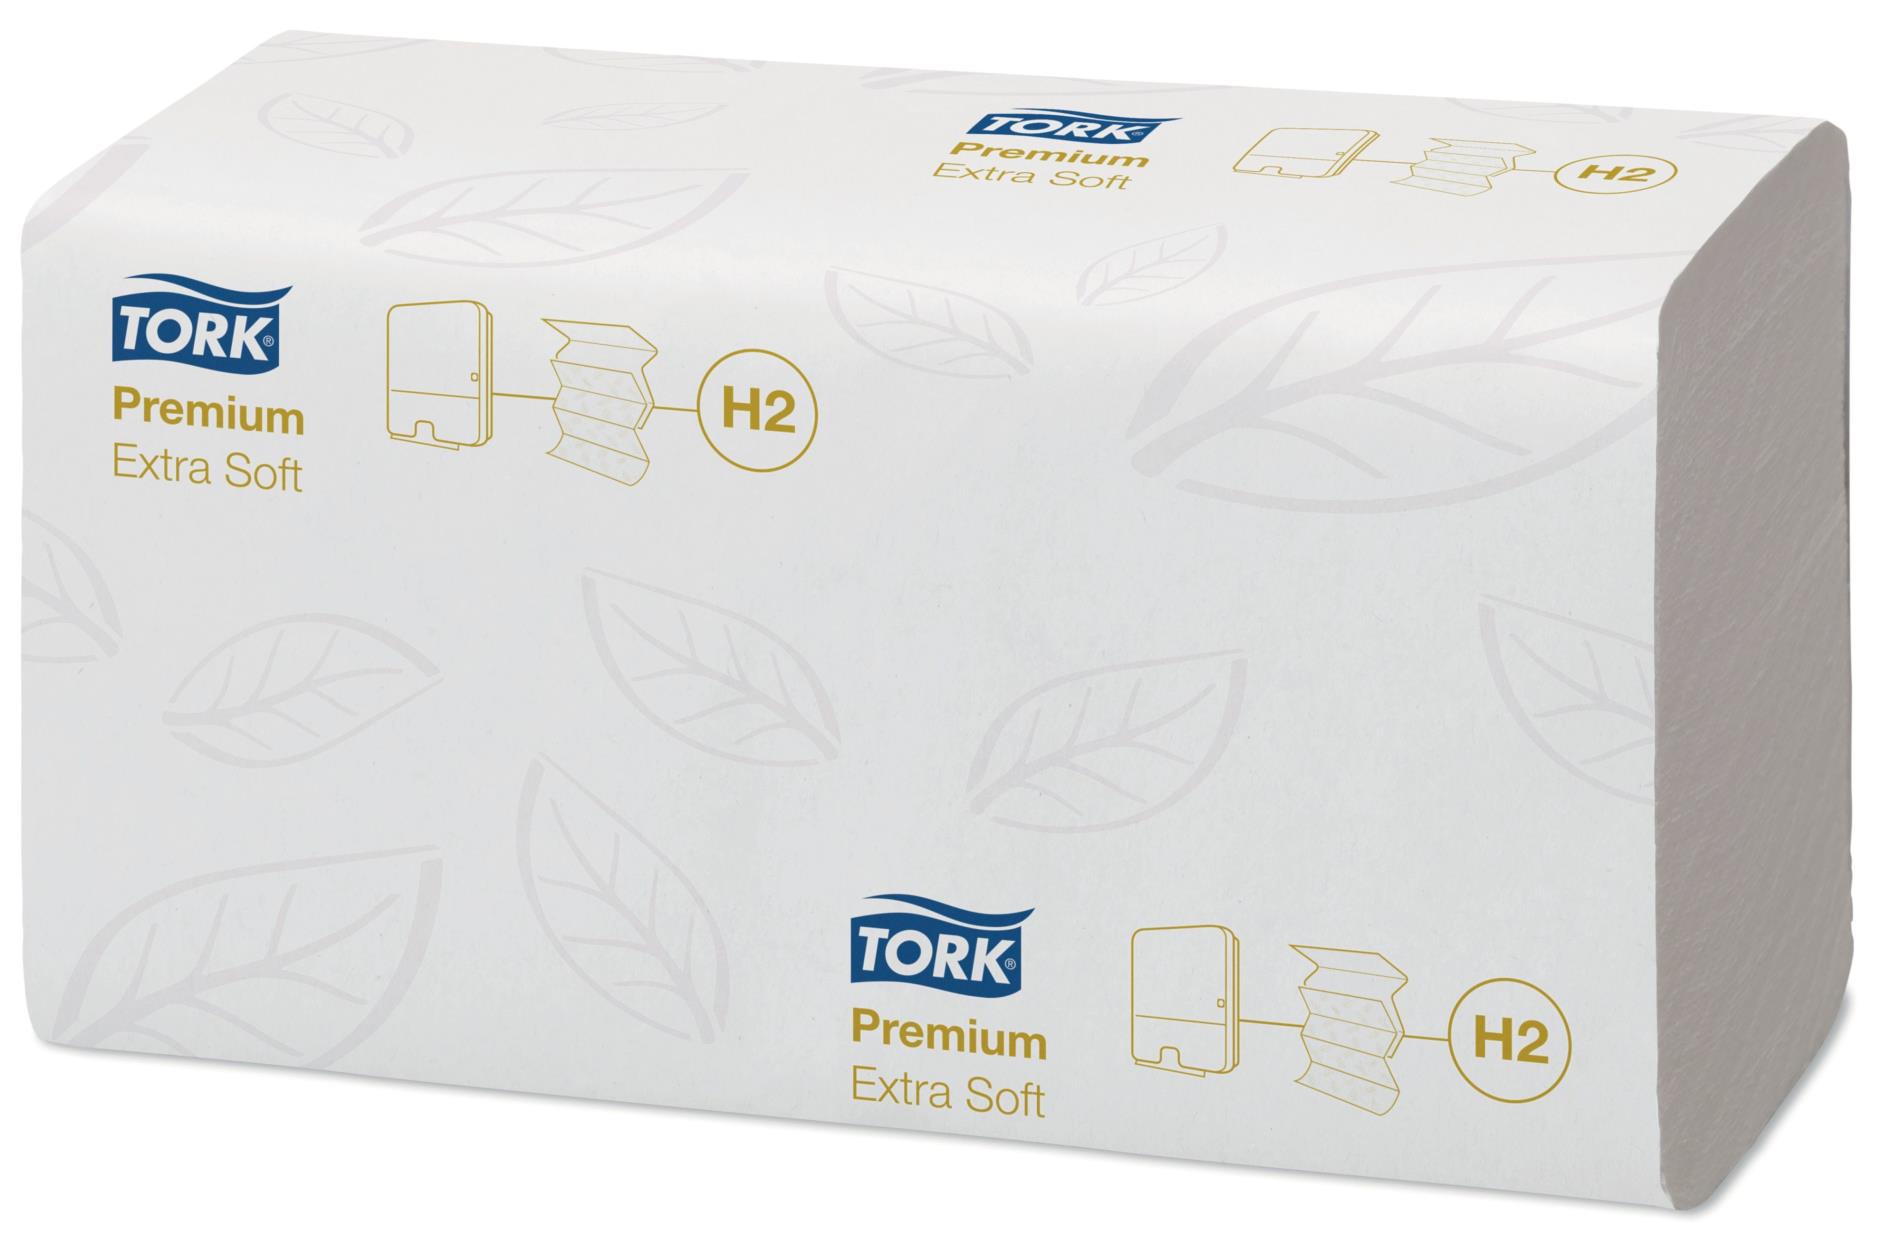 Skládané papírové ručníky Tork - Xpress, H2, 2vrstvé, bílé, 2 100 ks